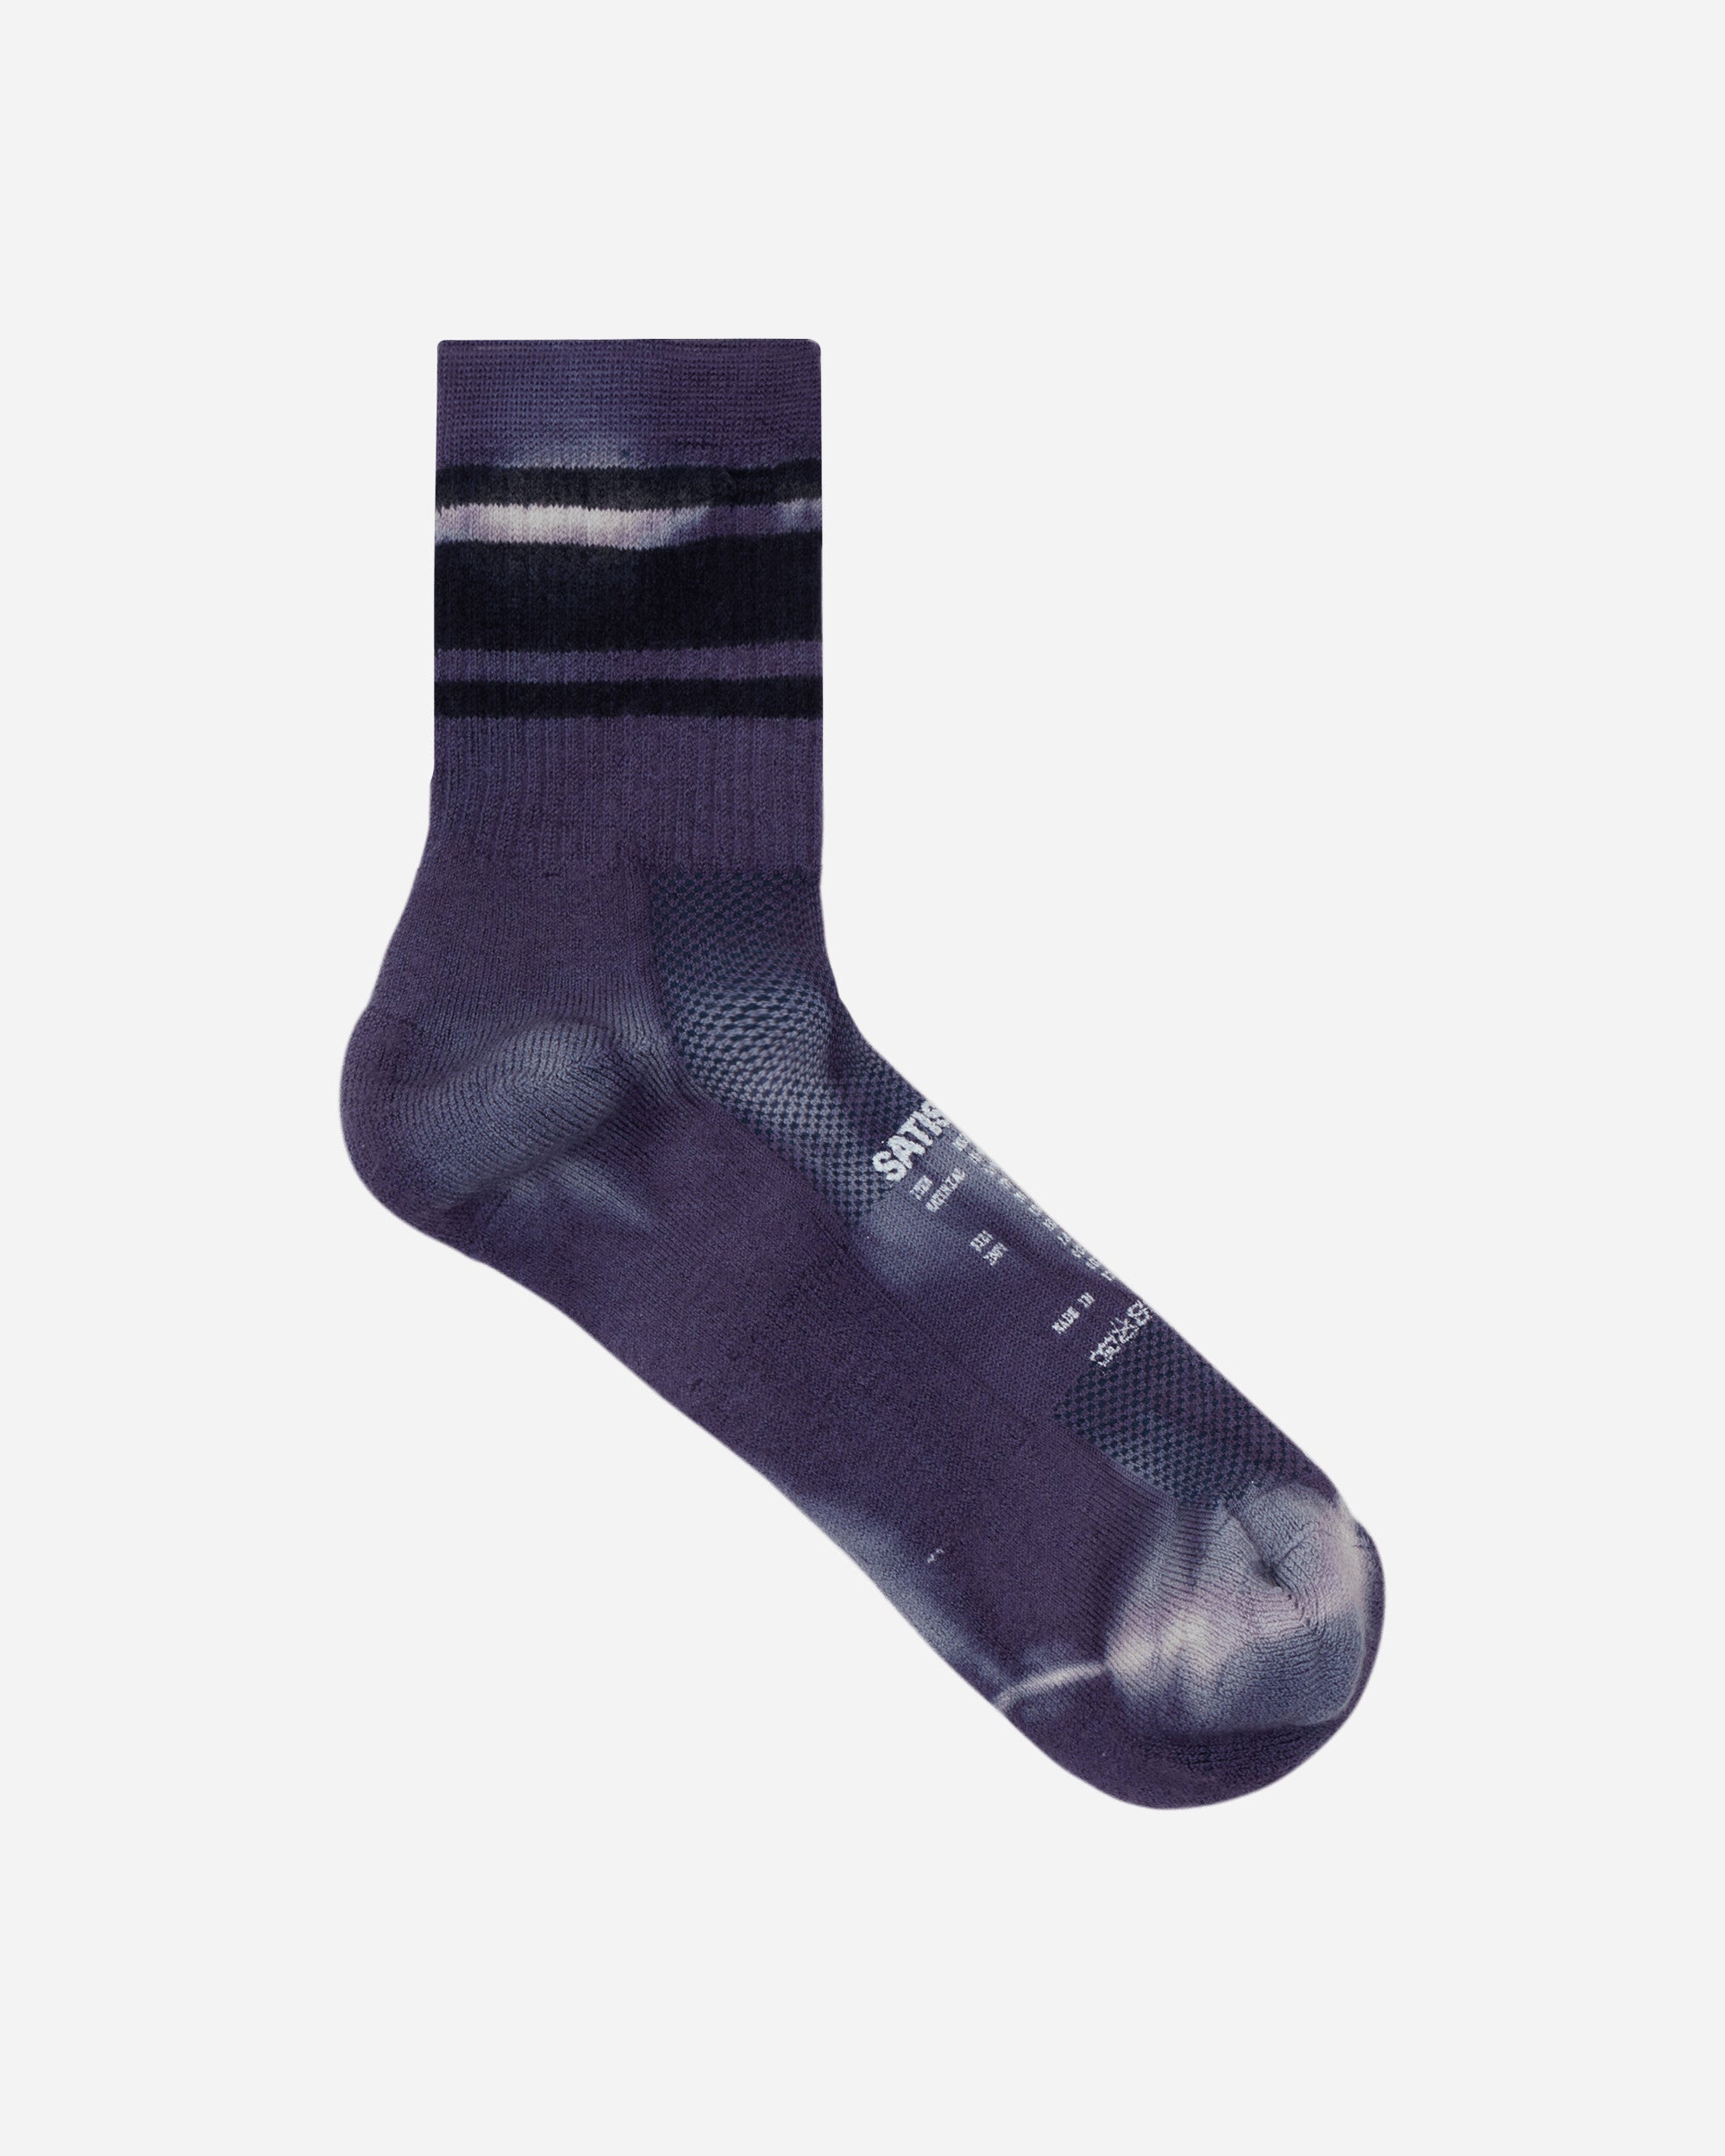 Satisfy Merino Tube Socks Deep Lilac Underwear Socks 5110 DL